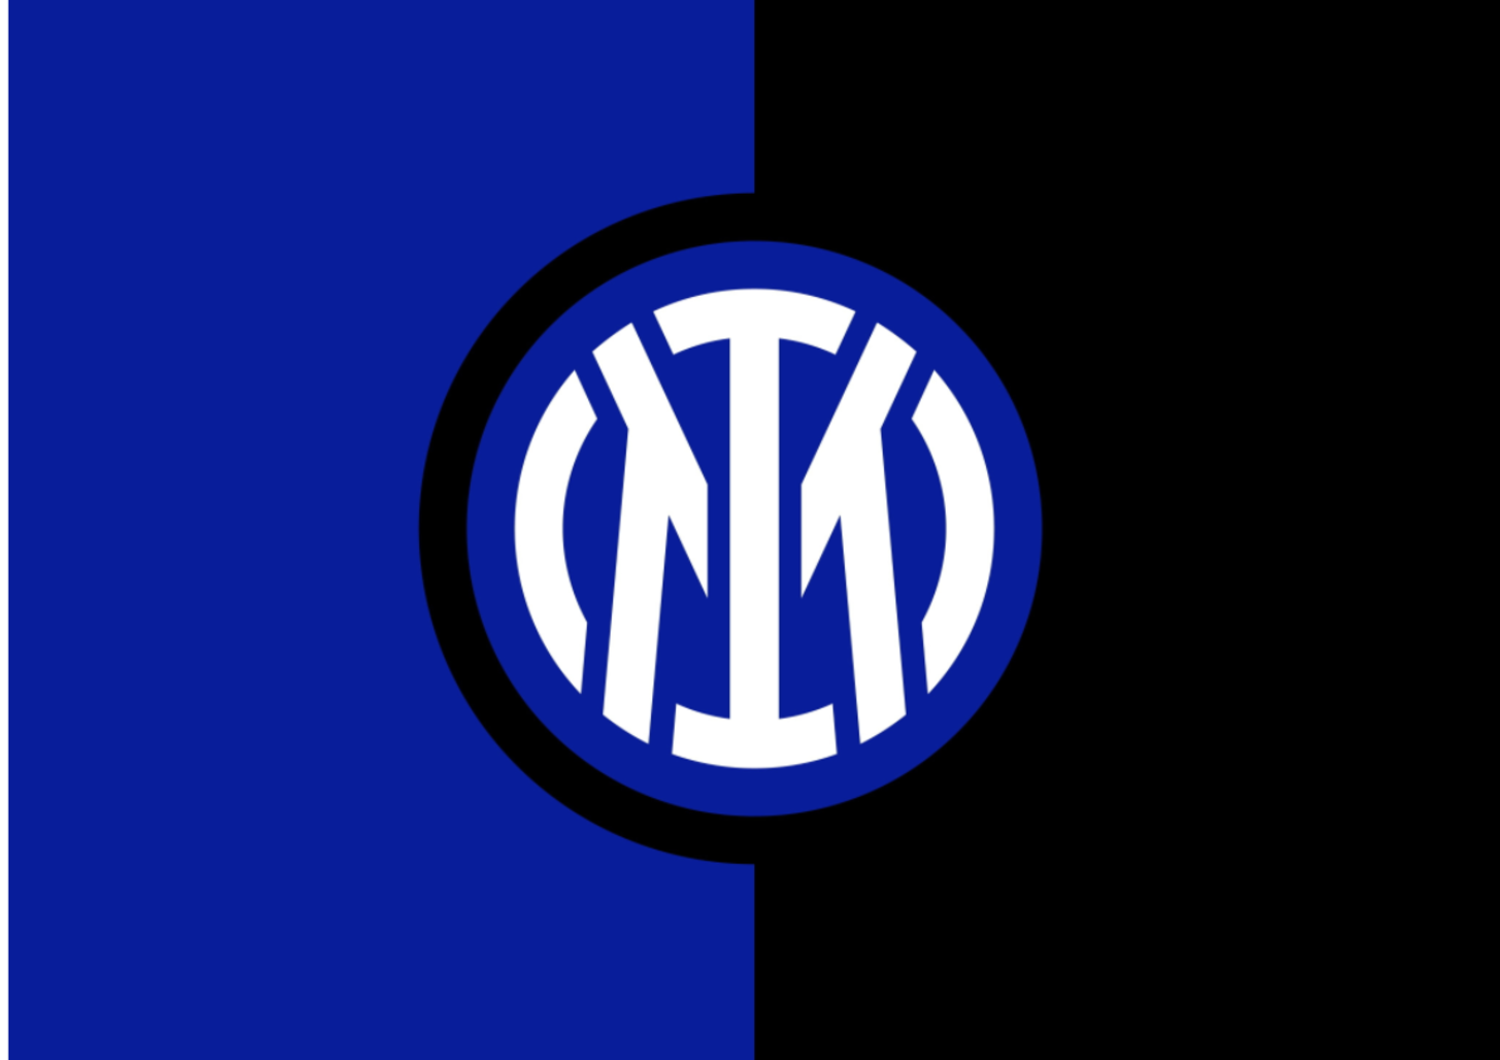 Nuovo logo Inter